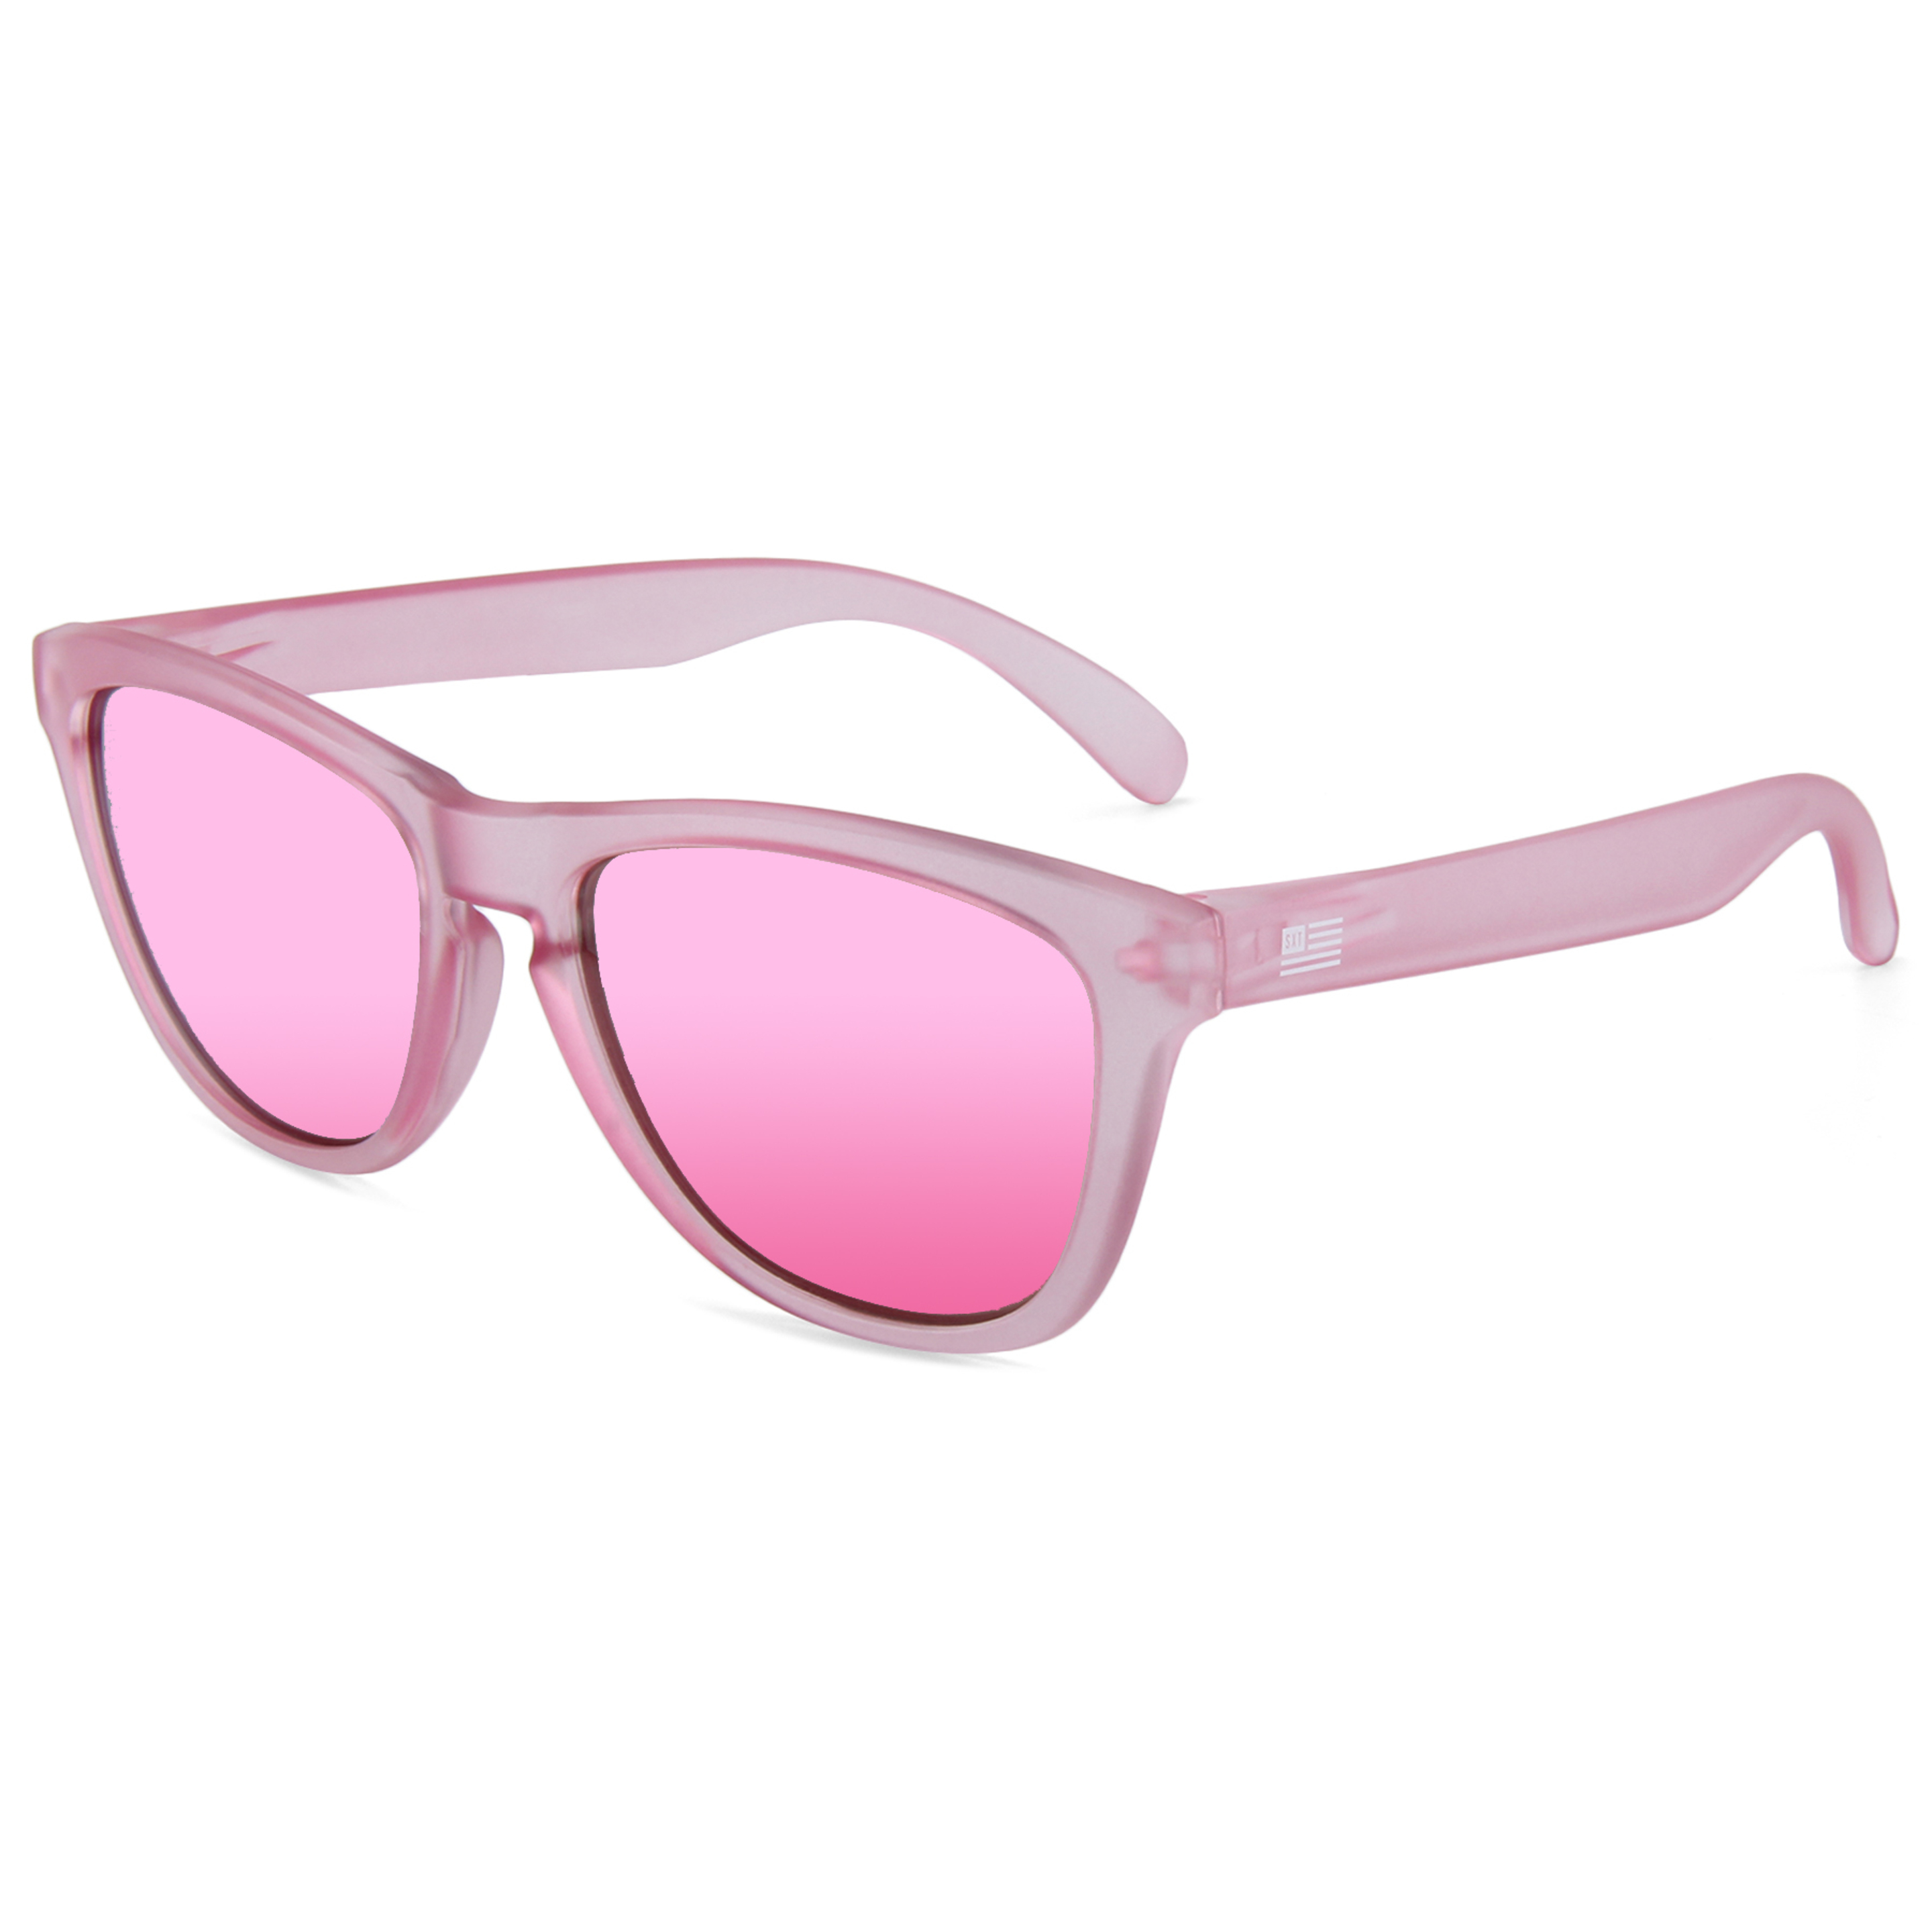 Gafas De Sol Sexton Original - rosa - 